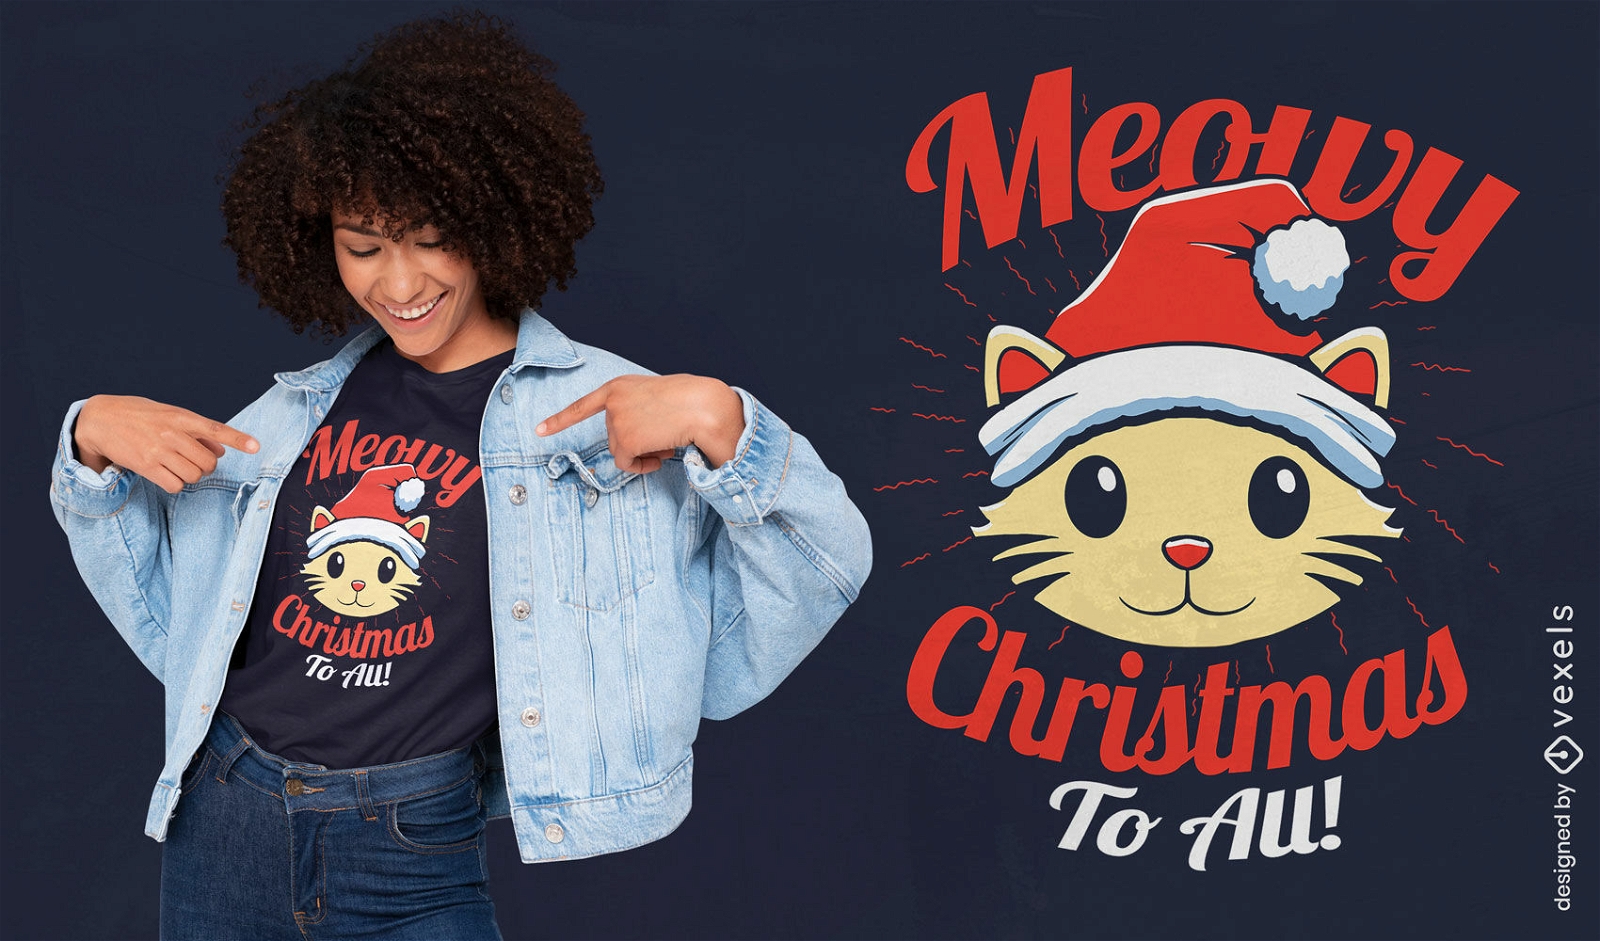 Lindo diseño de camiseta de juego de palabras con gatos navideños.